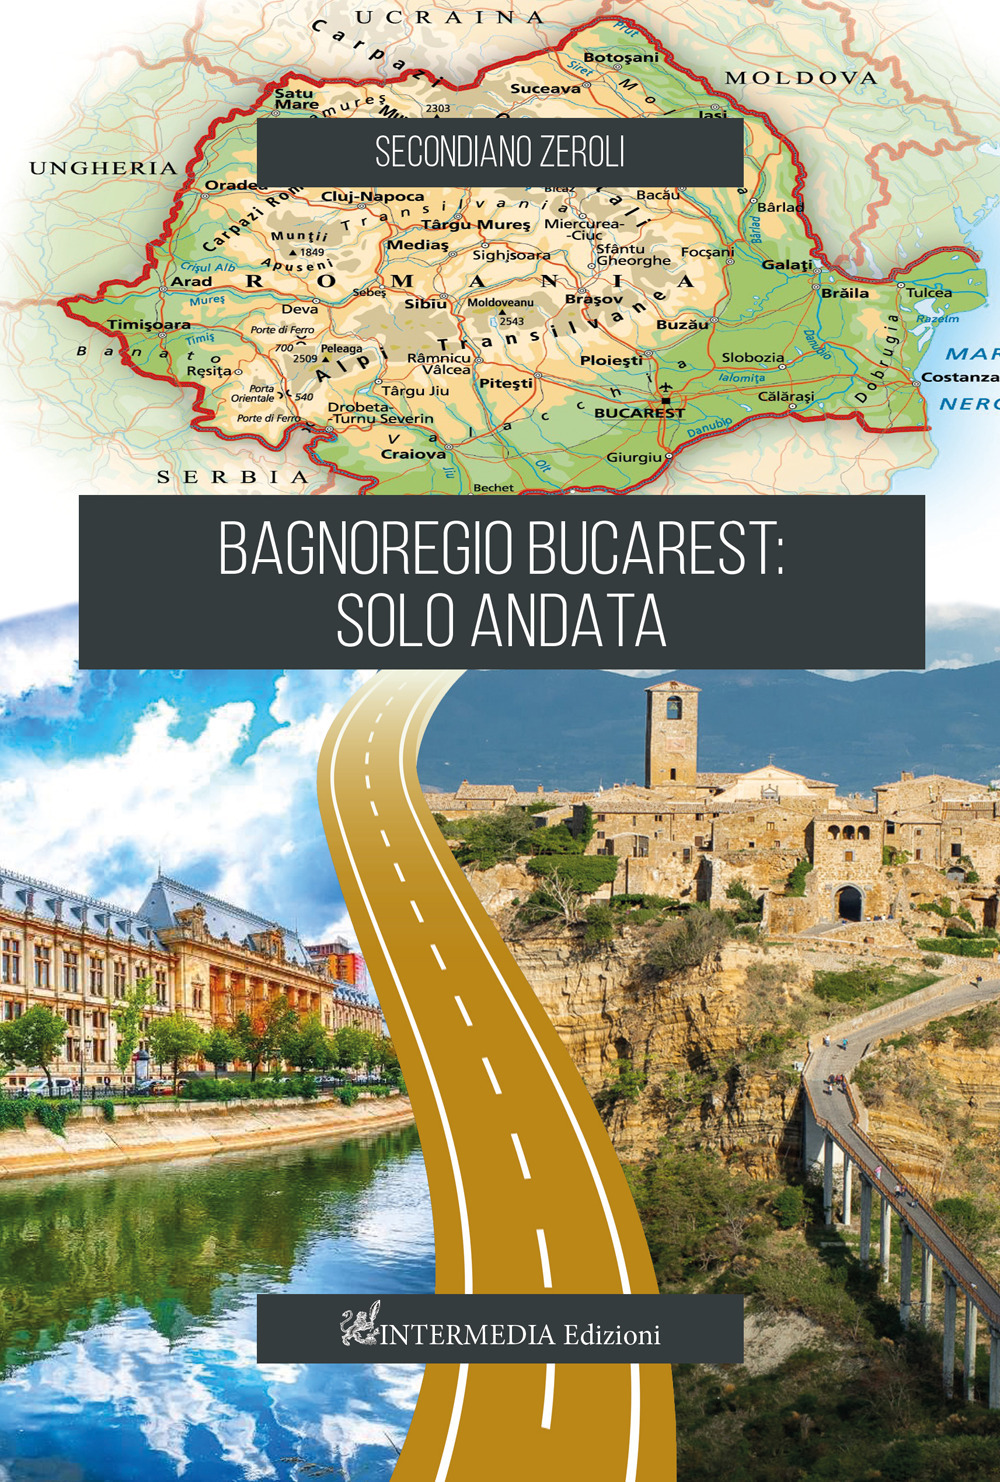 Bagnoregio-Bucarest: solo andata